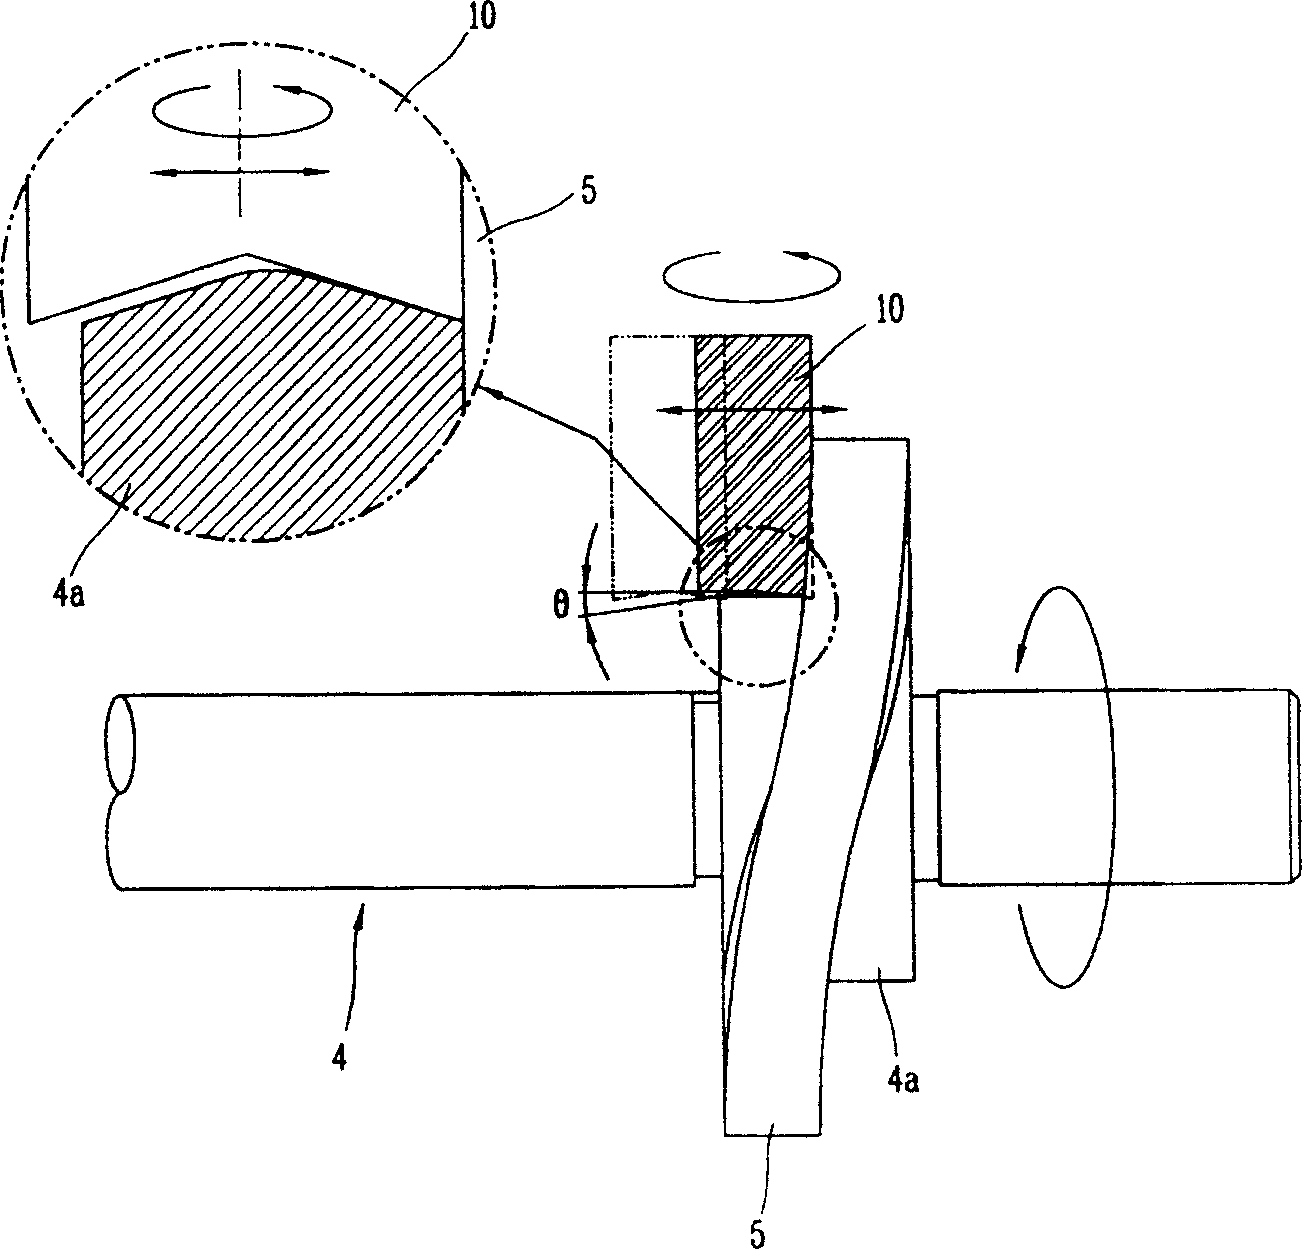 Method for machining blade compressor